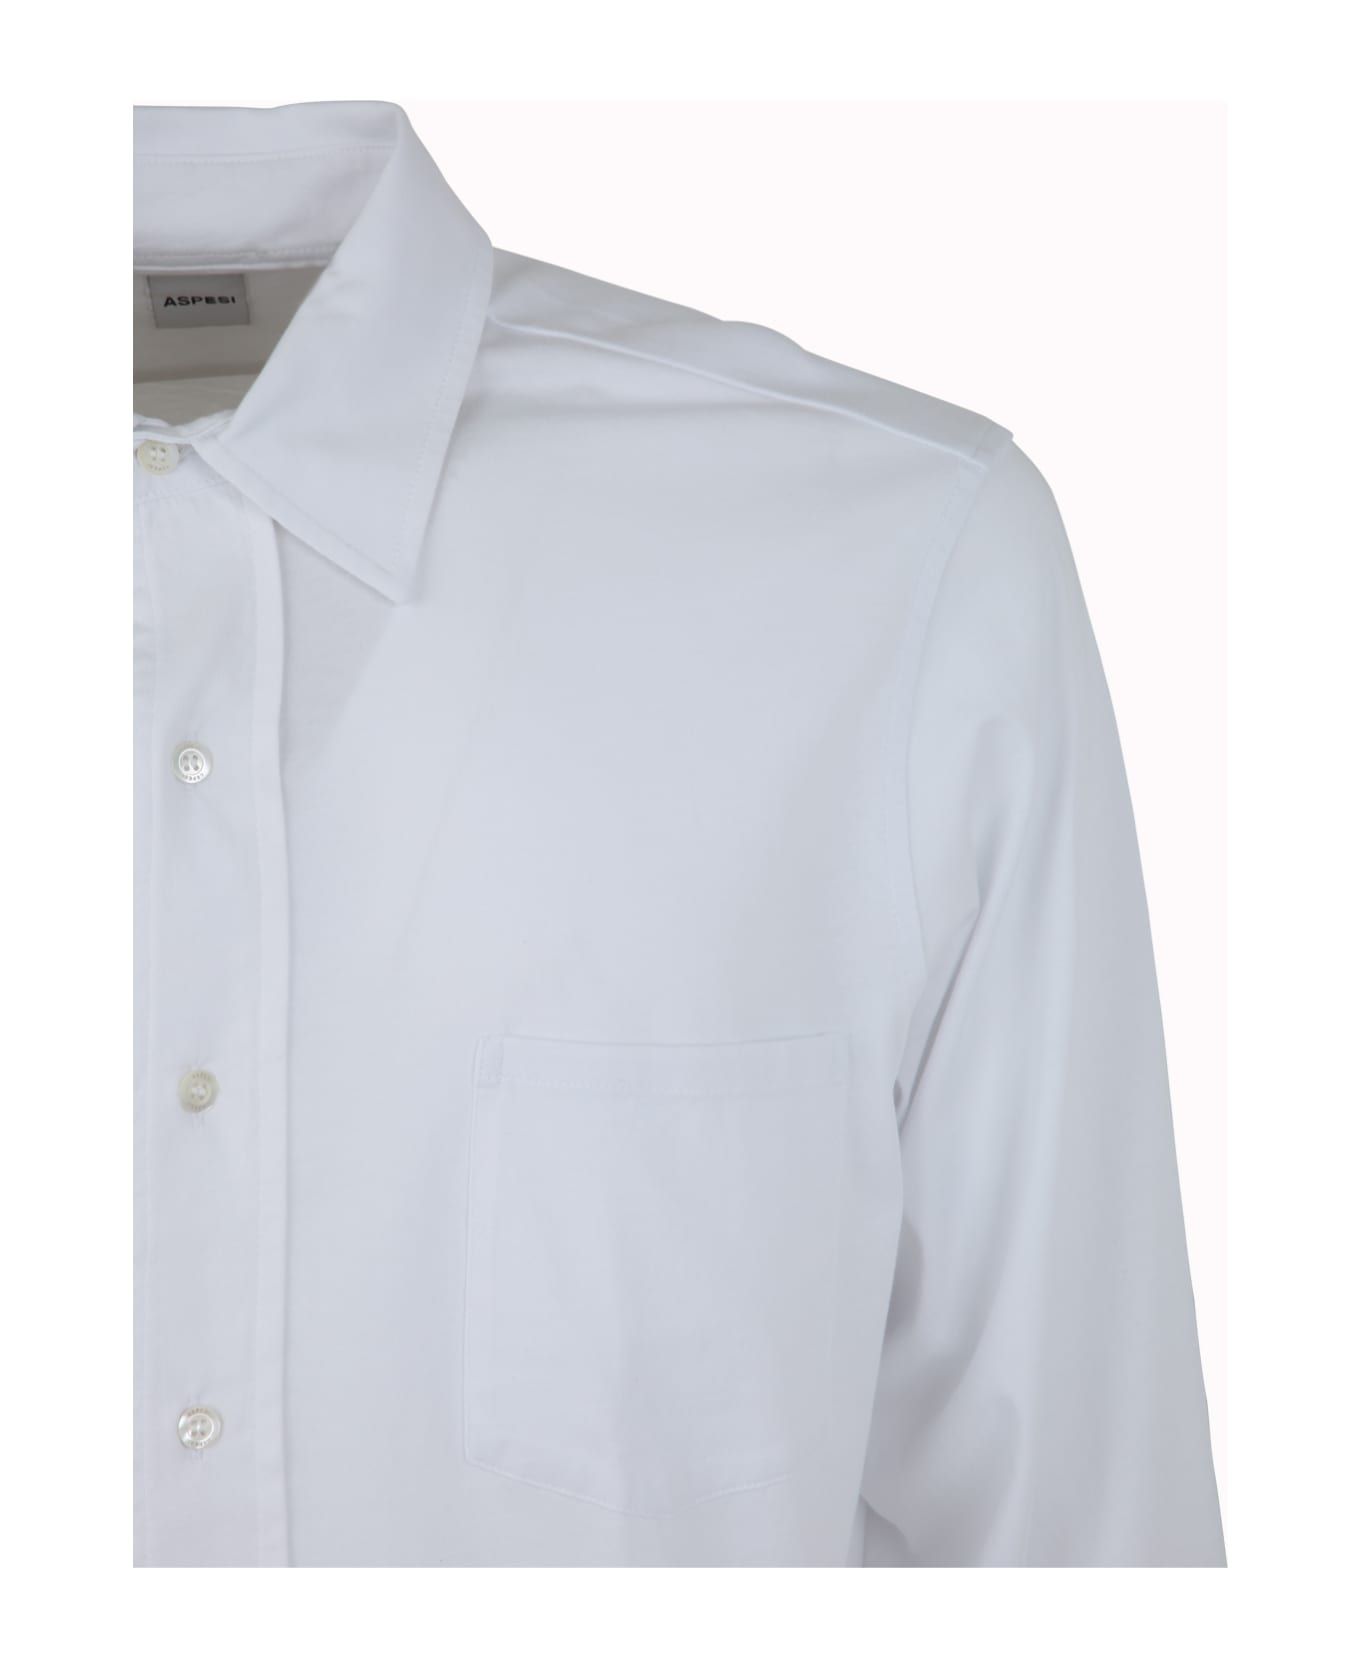 Aspesi Mod Ay34 Shirt - White